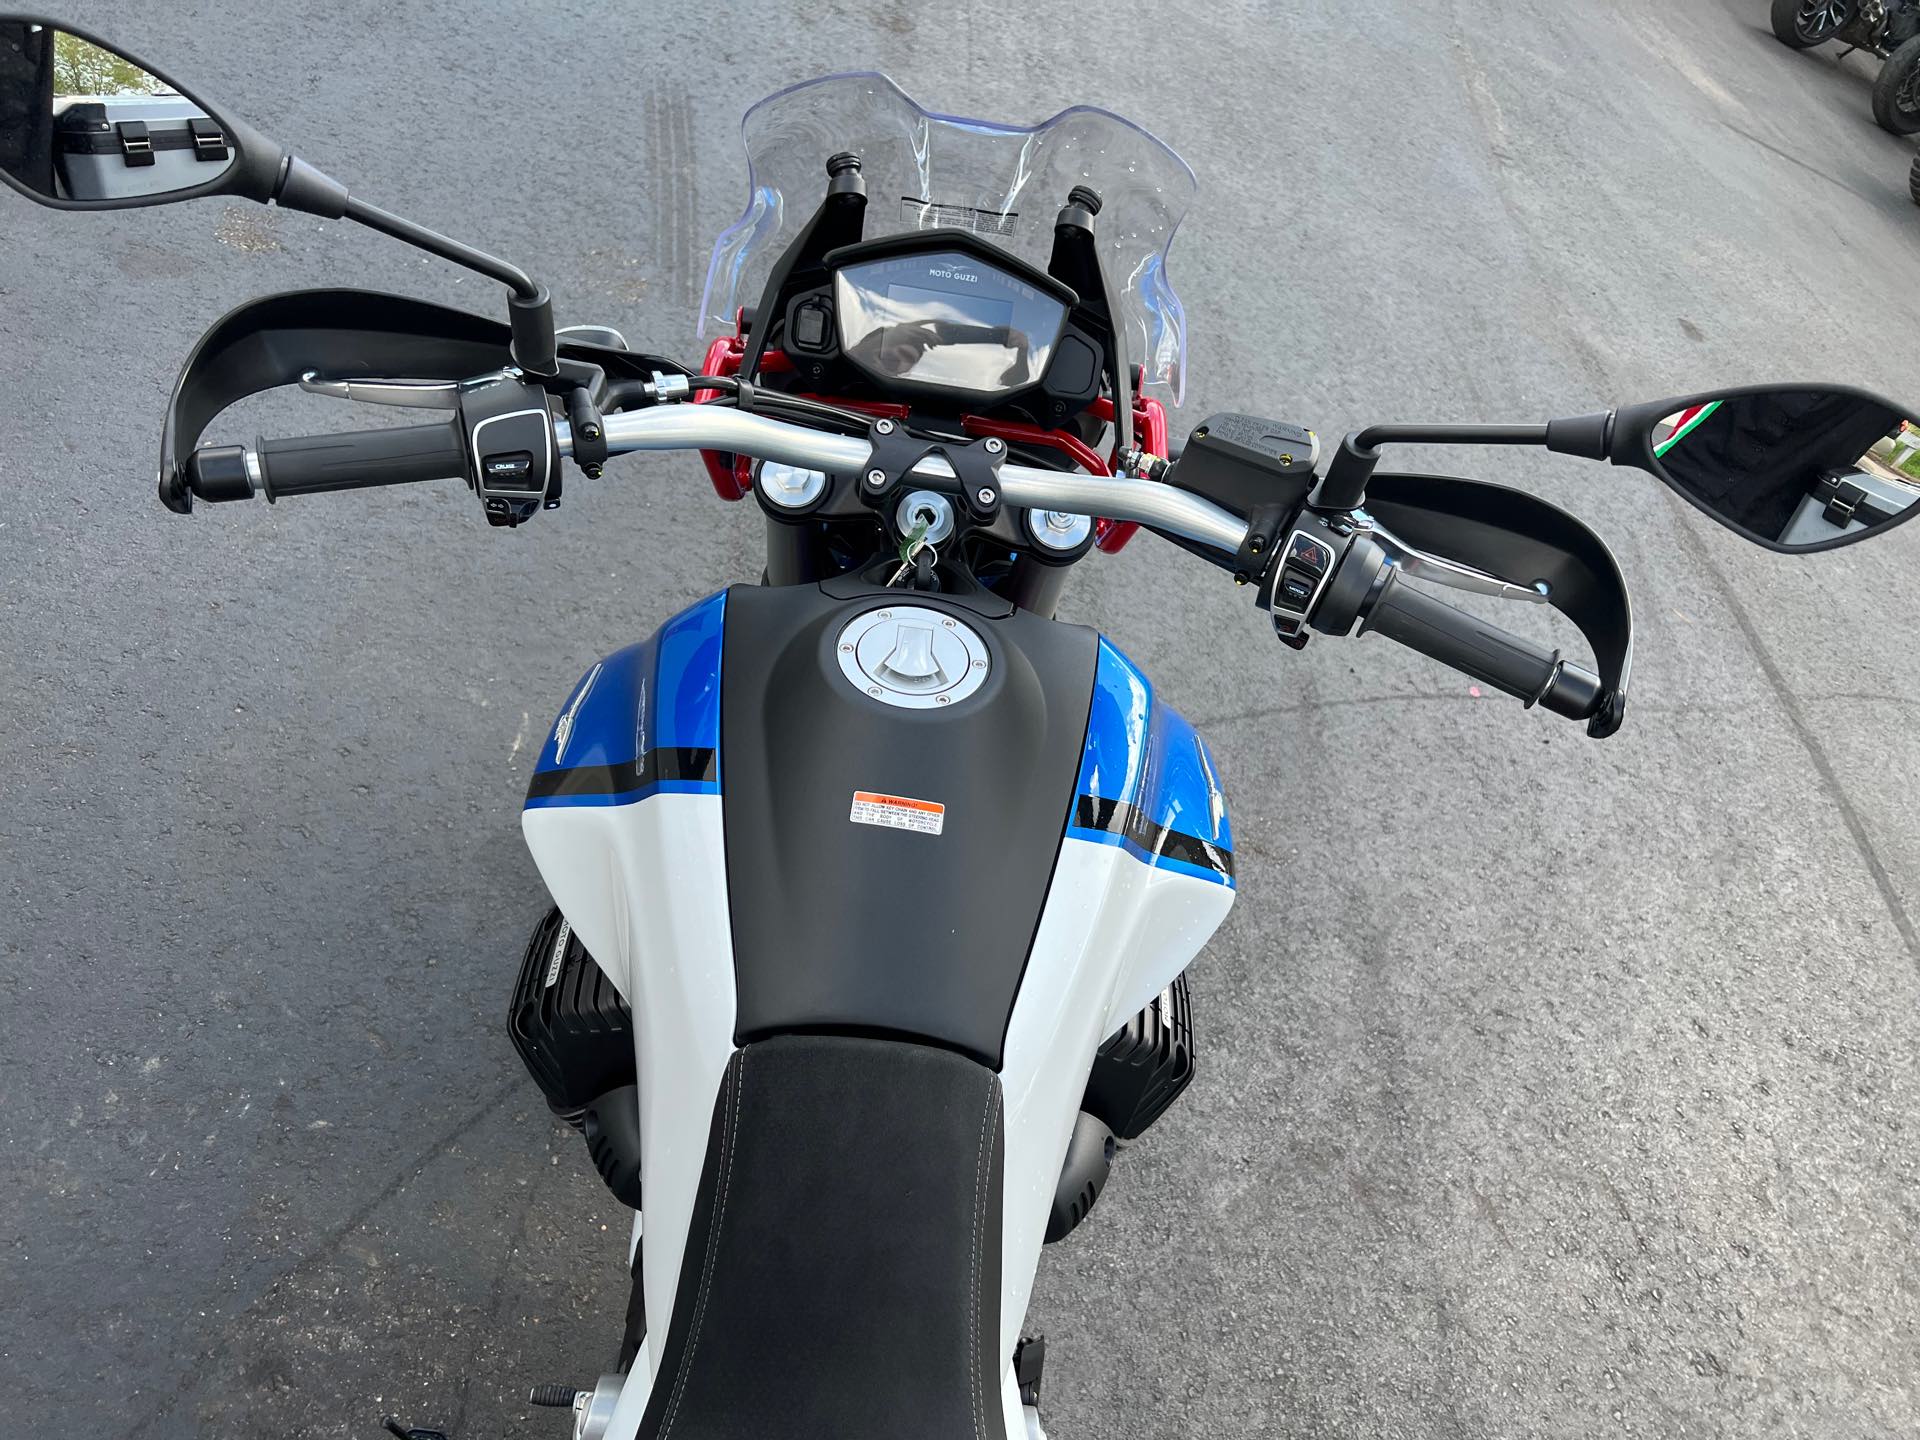 2023 Moto Guzzi V85 TT Adventure at Aces Motorcycles - Fort Collins